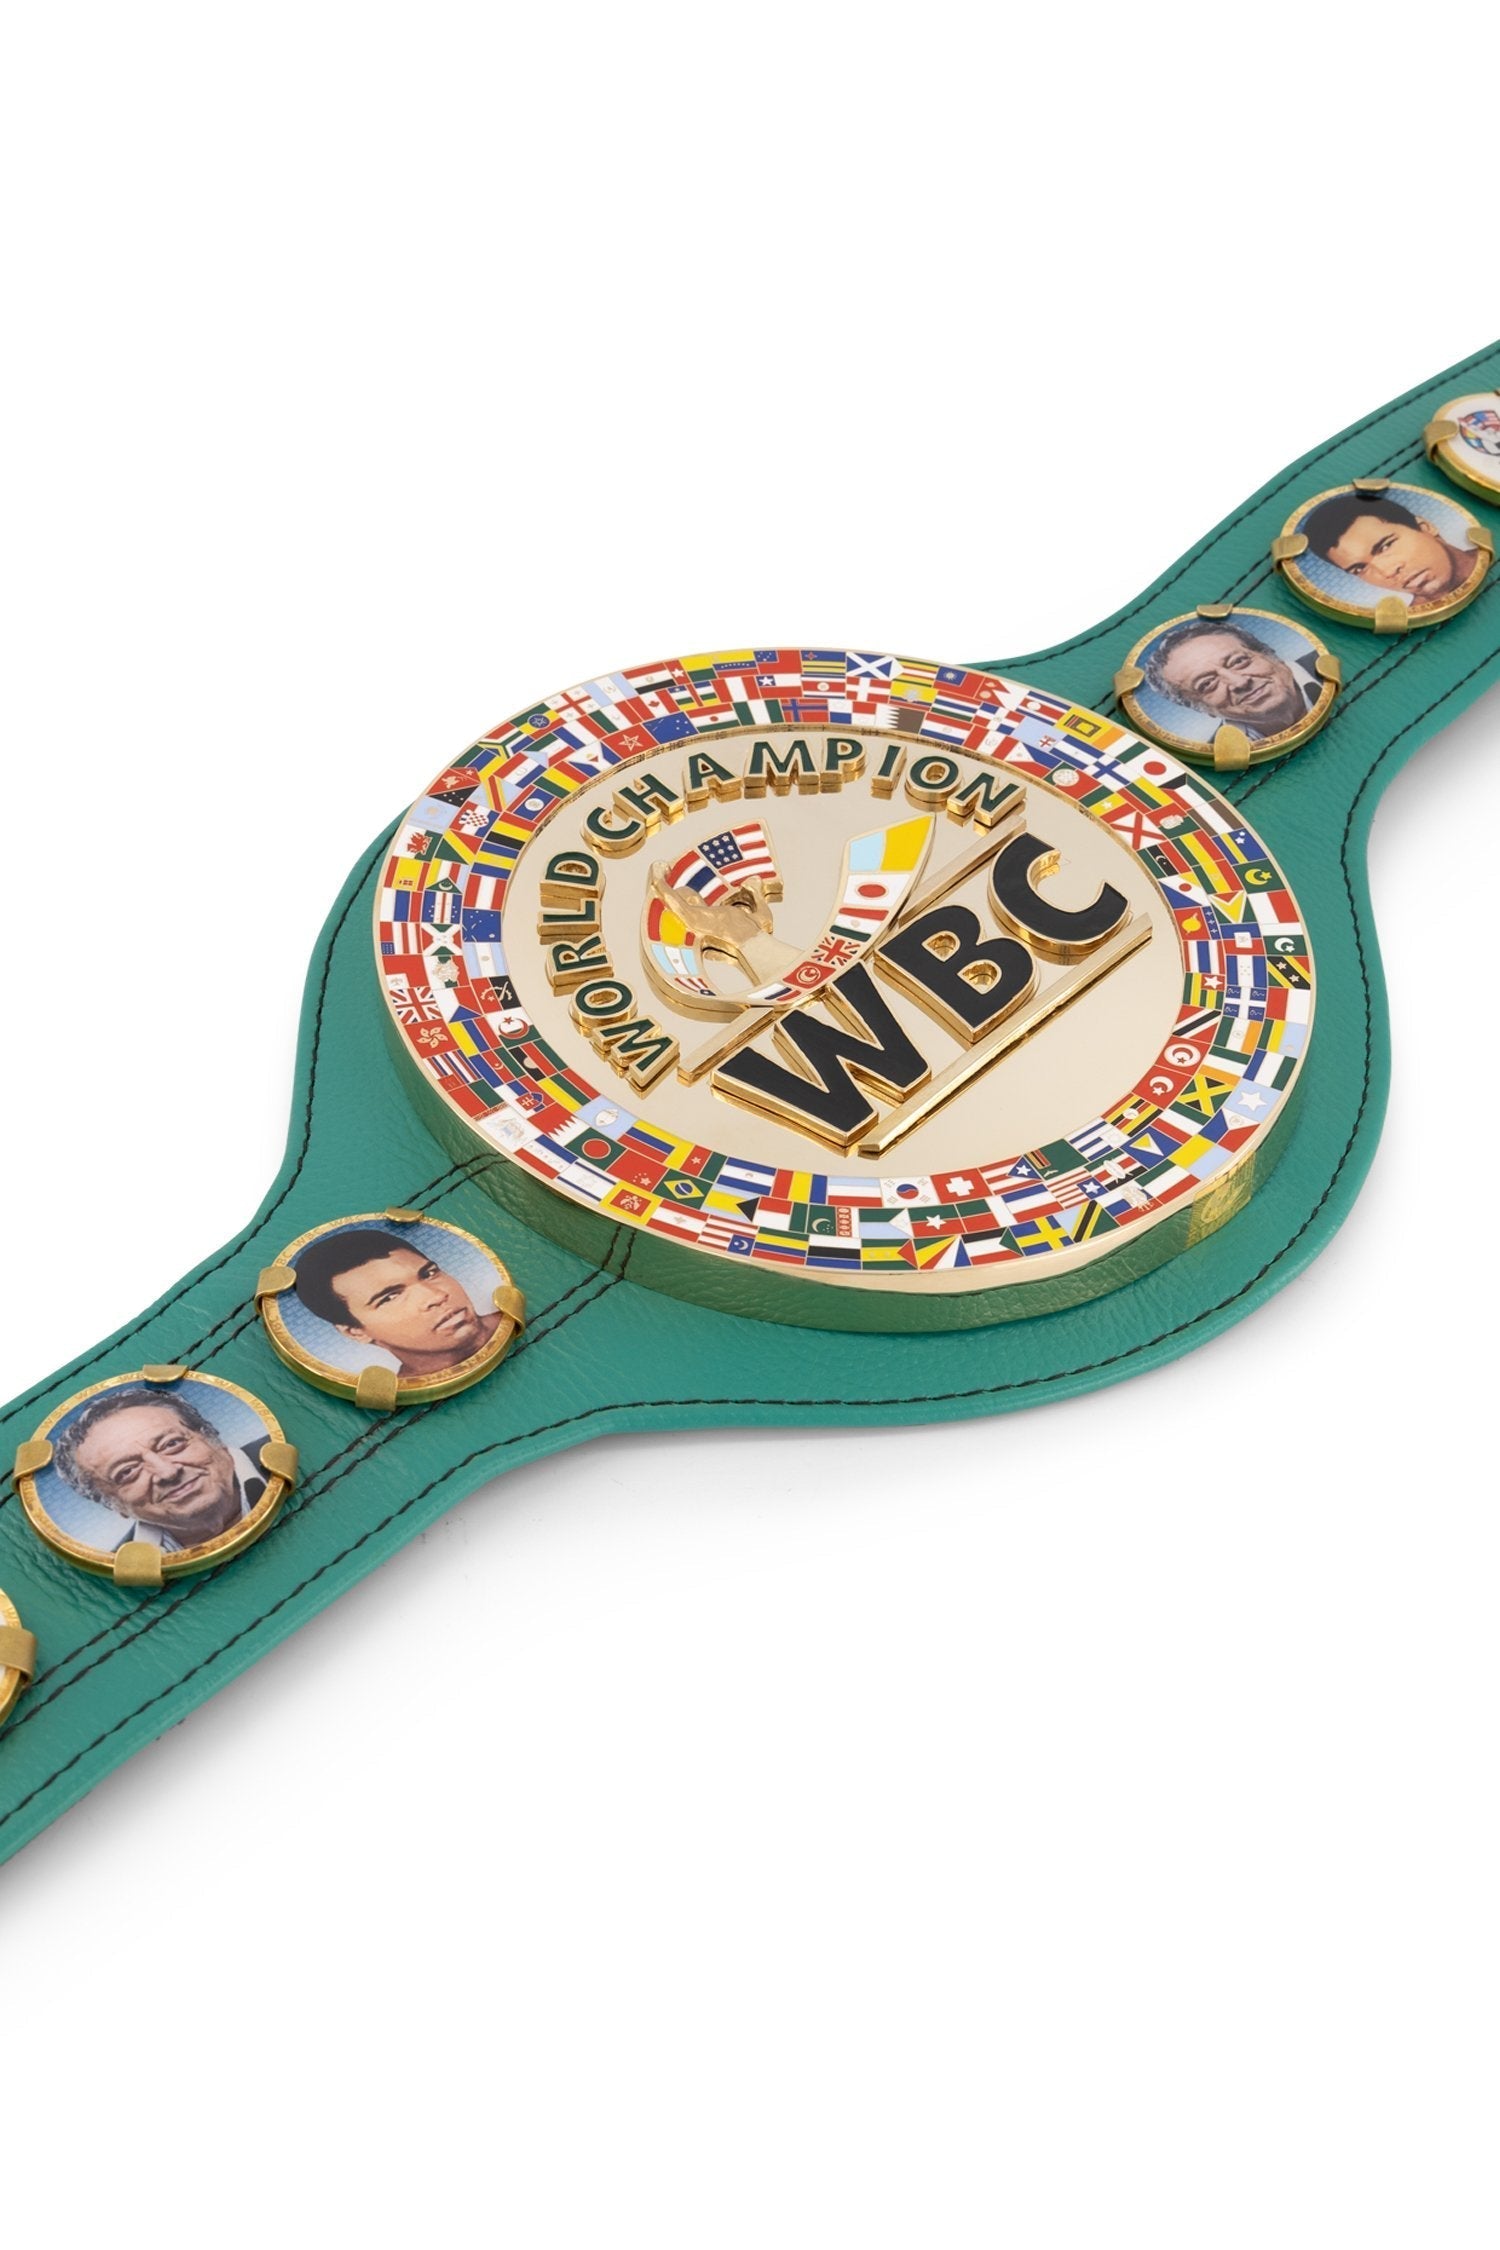 WBC Store Replica Belts WBC - Custom Championship Replica Belt